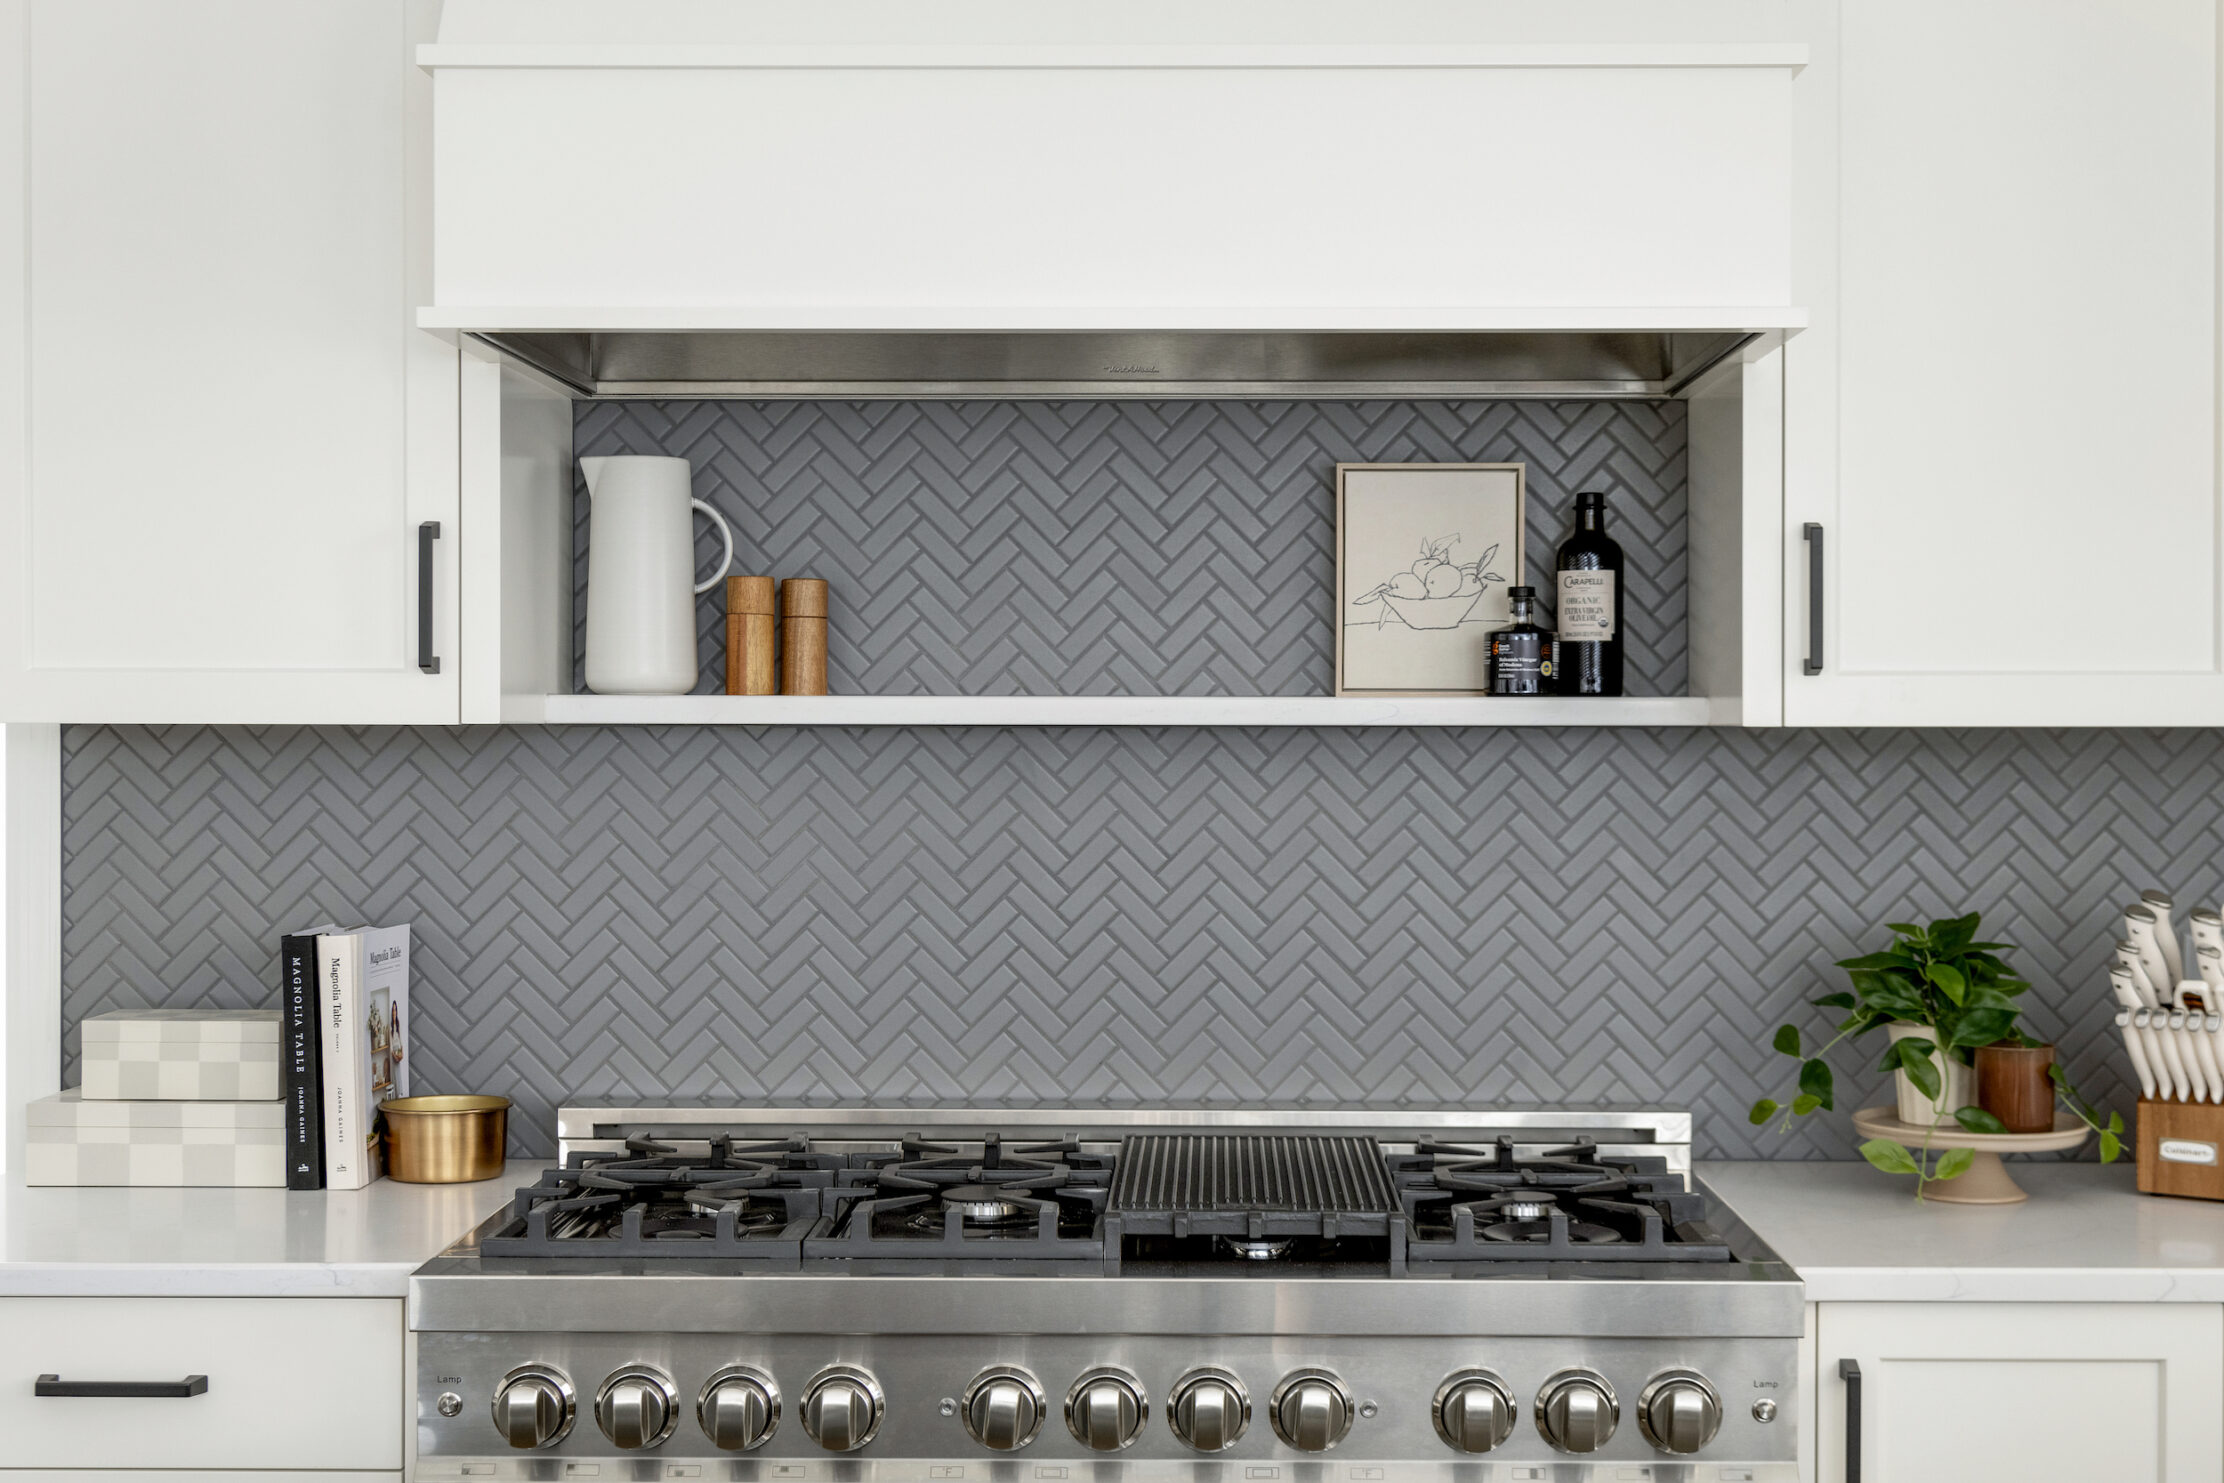 Textured kitchen backsplash with white cabinetry